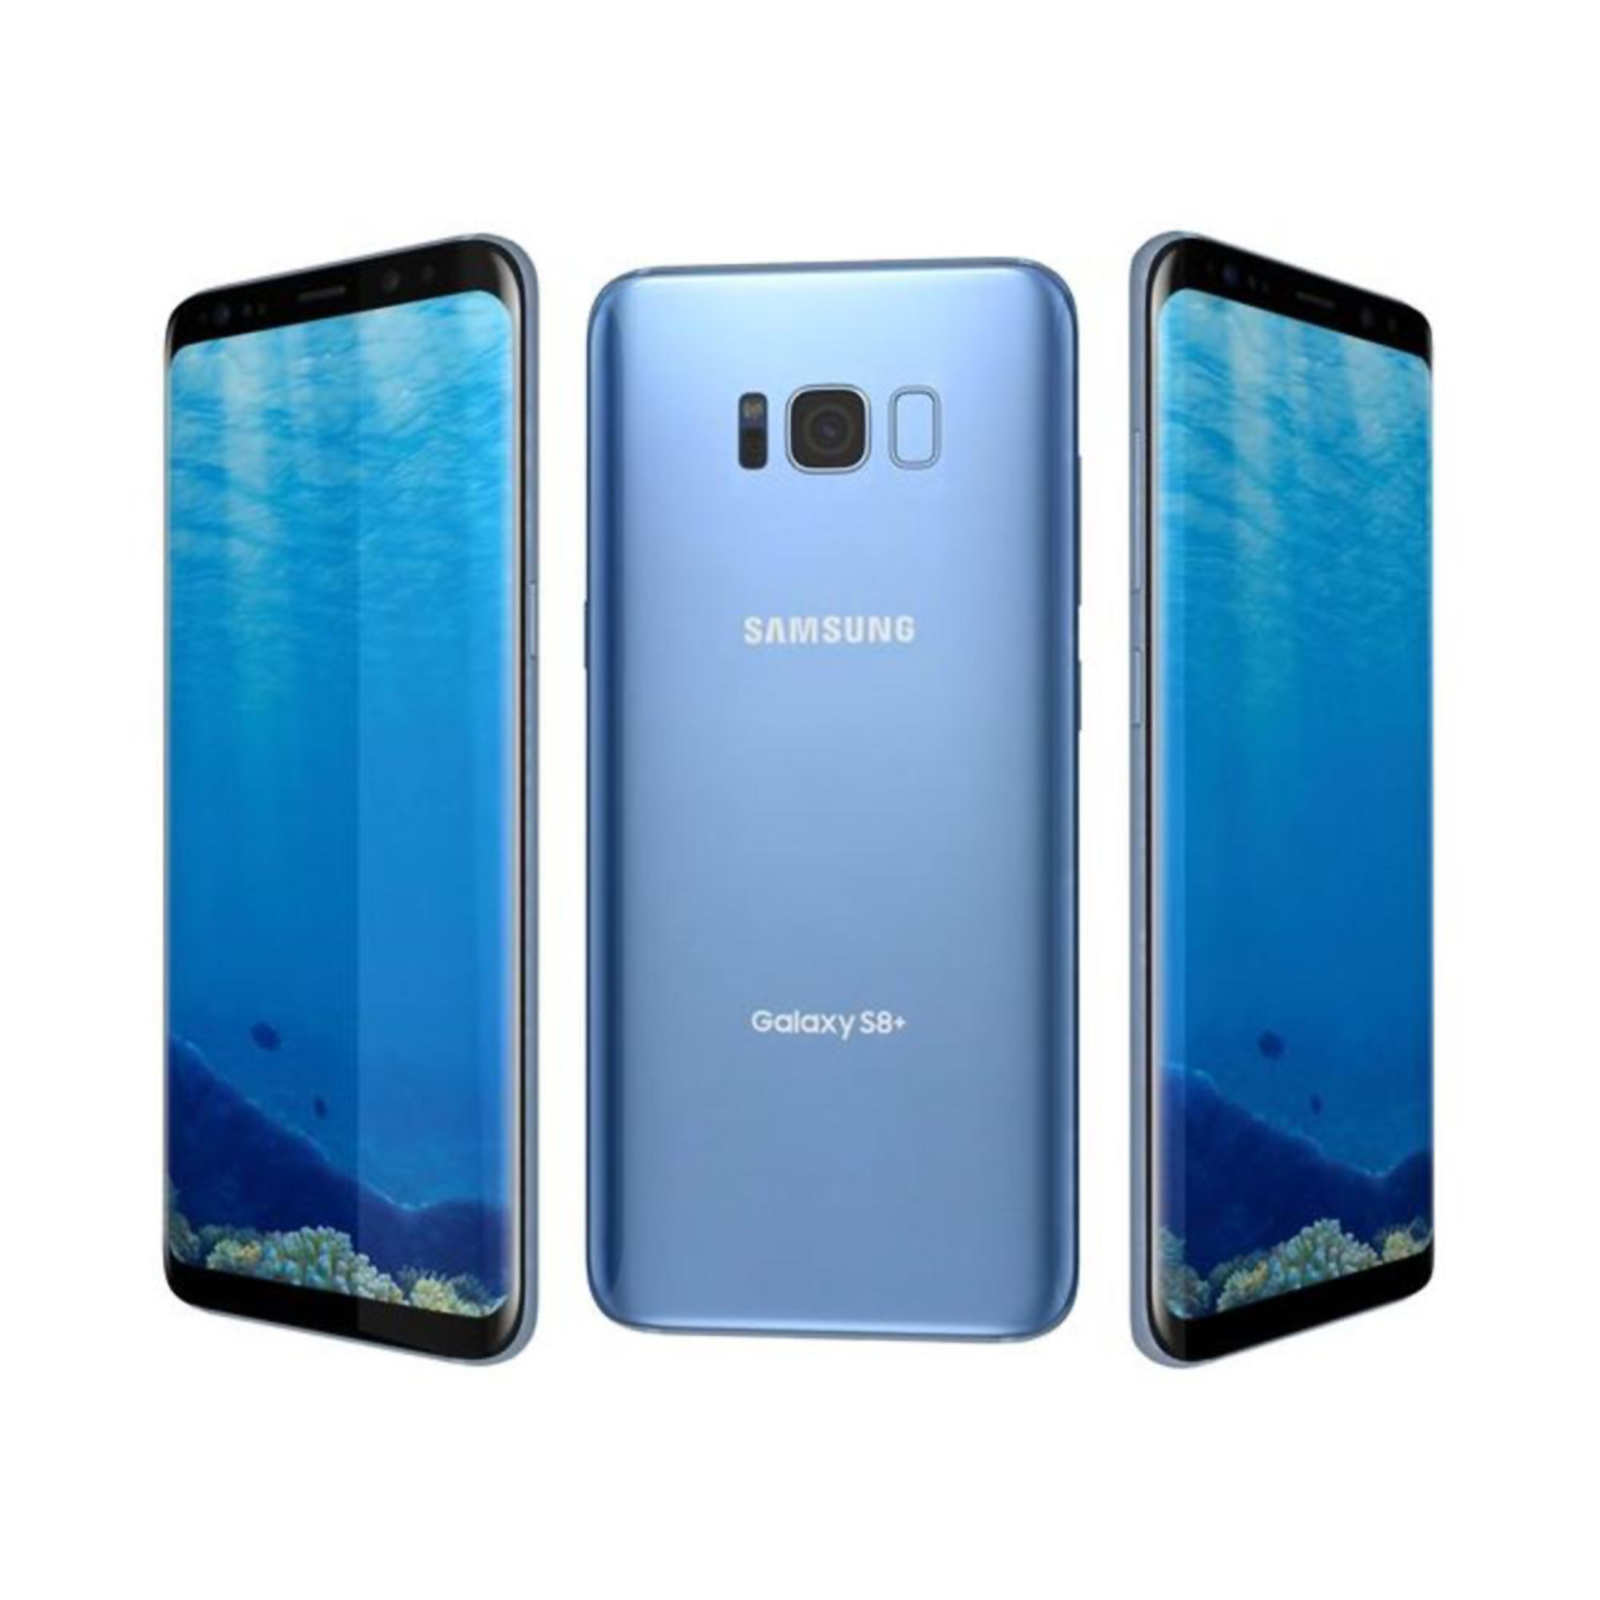 Samsung Galaxy S8 Plus 64GB Factory Unlocked Smartphone - Coral Blue